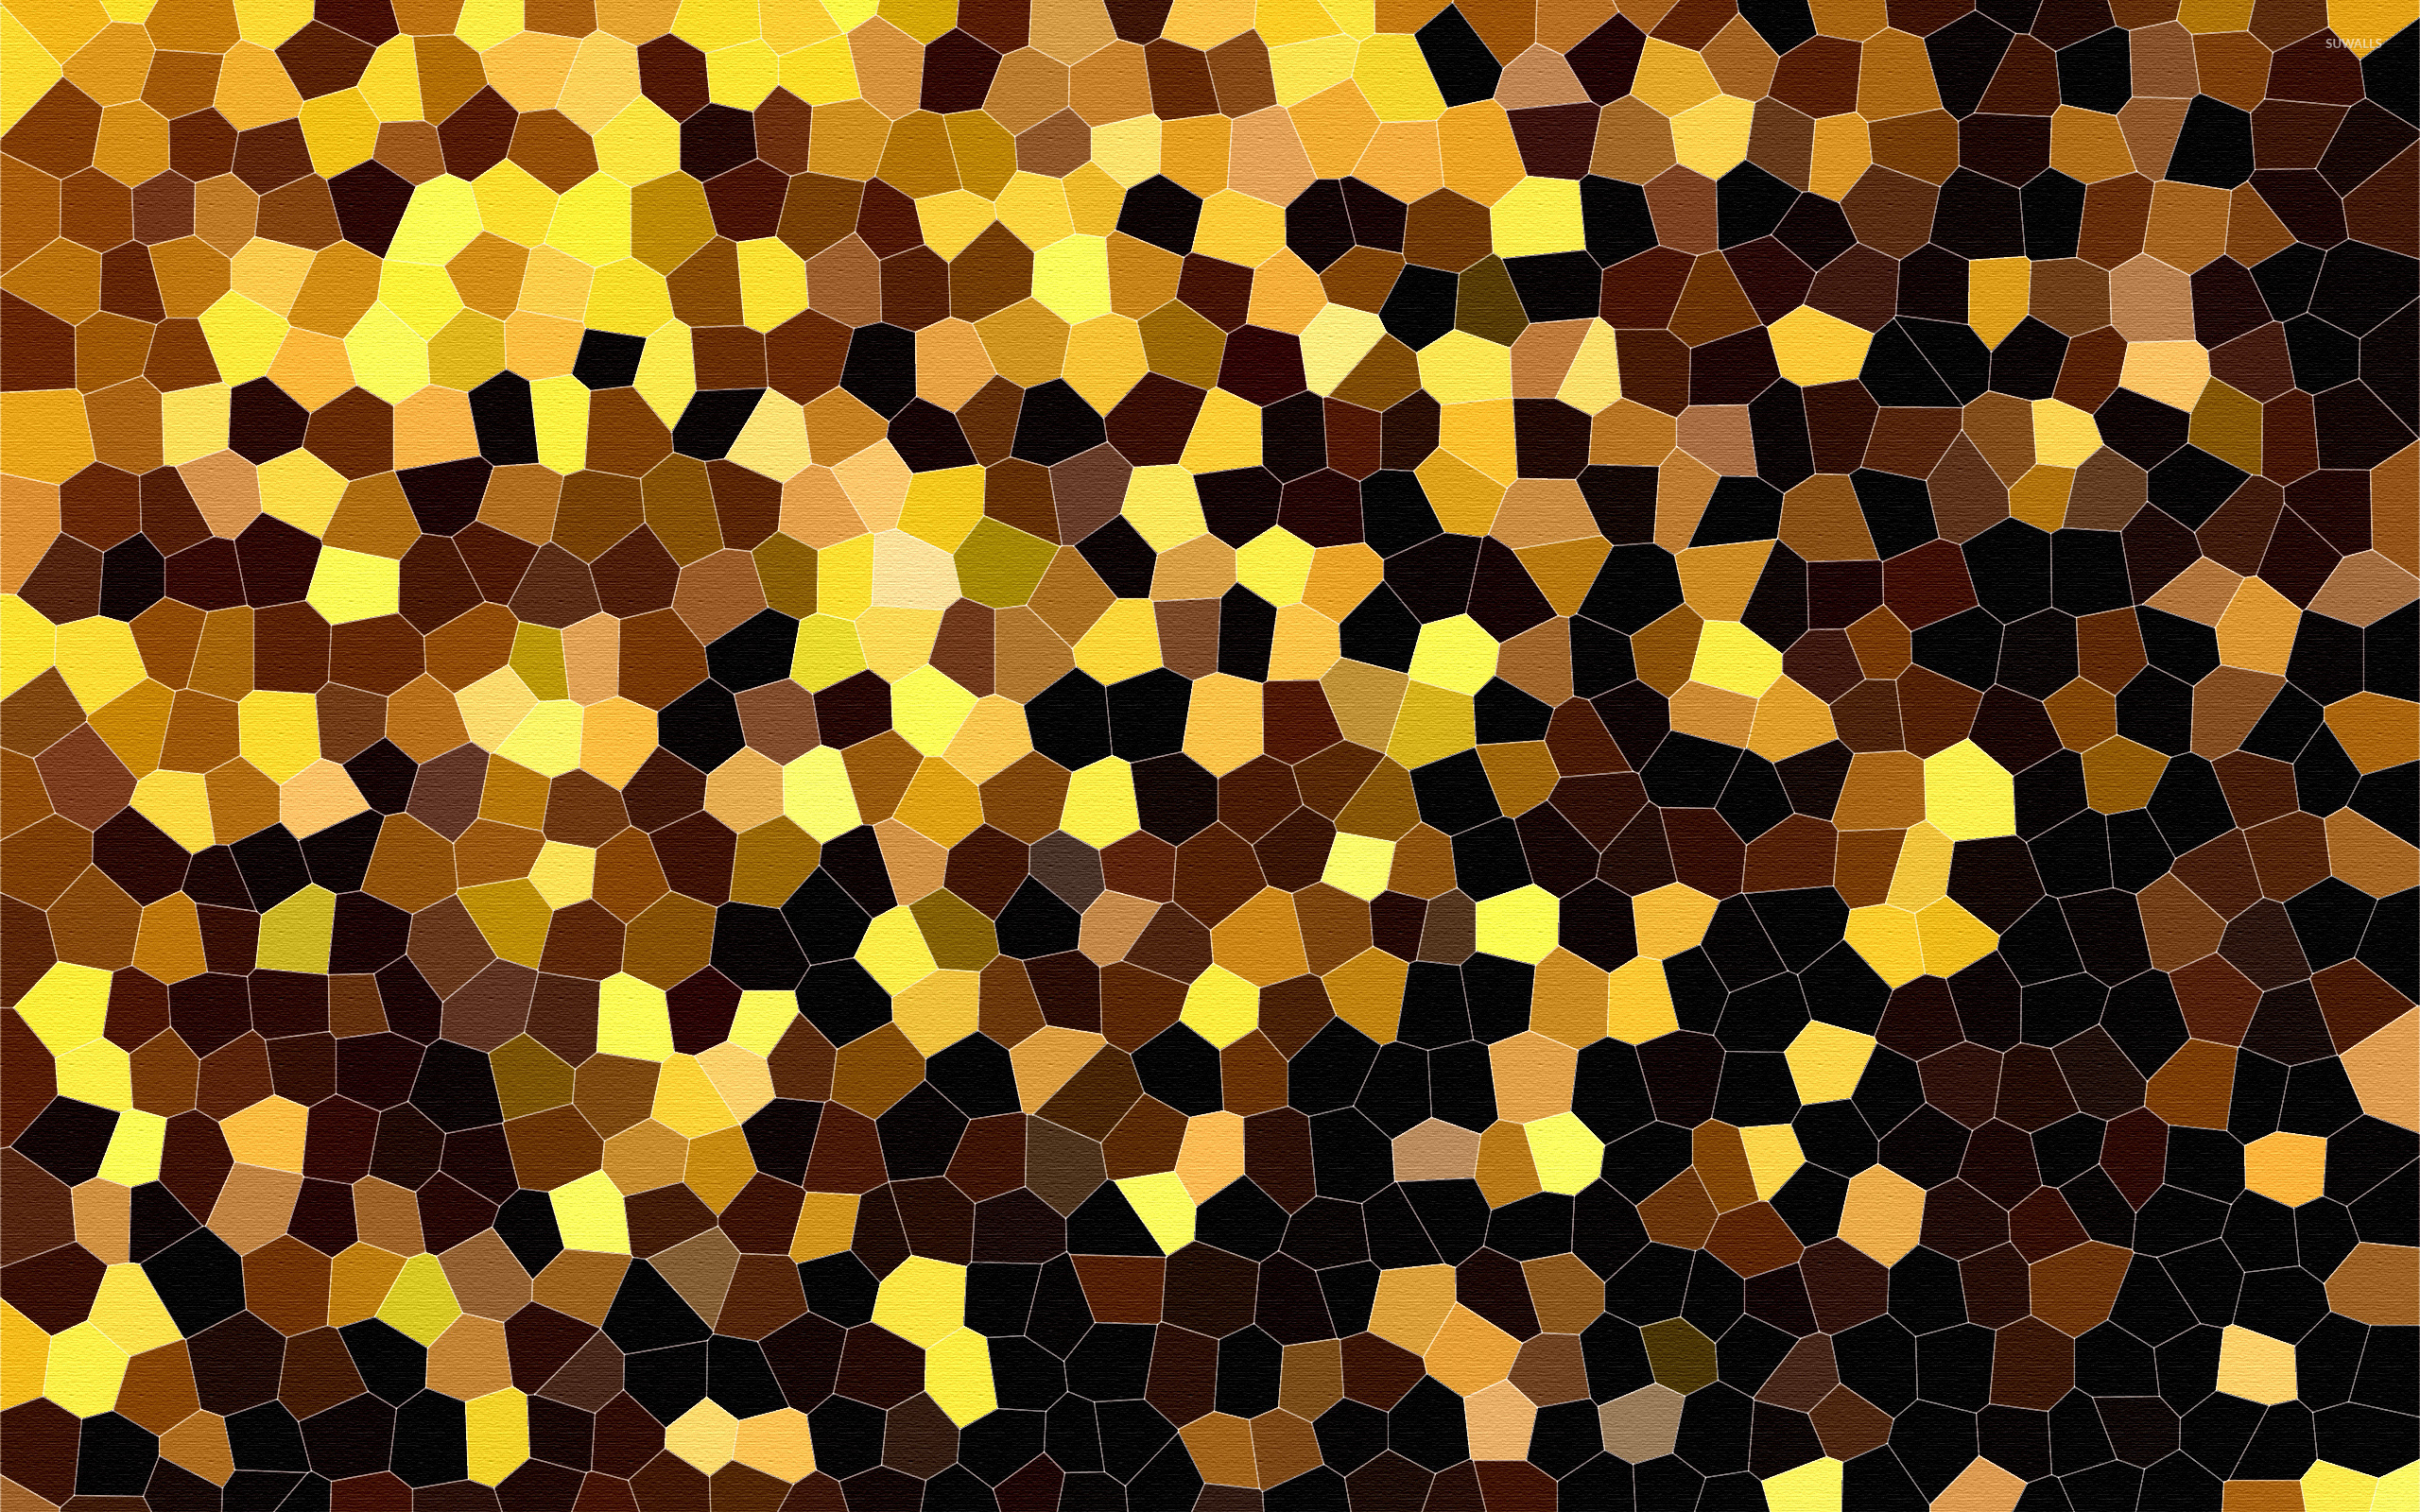 Textured mosaic wallpaper - Abstract wallpapers - #45976